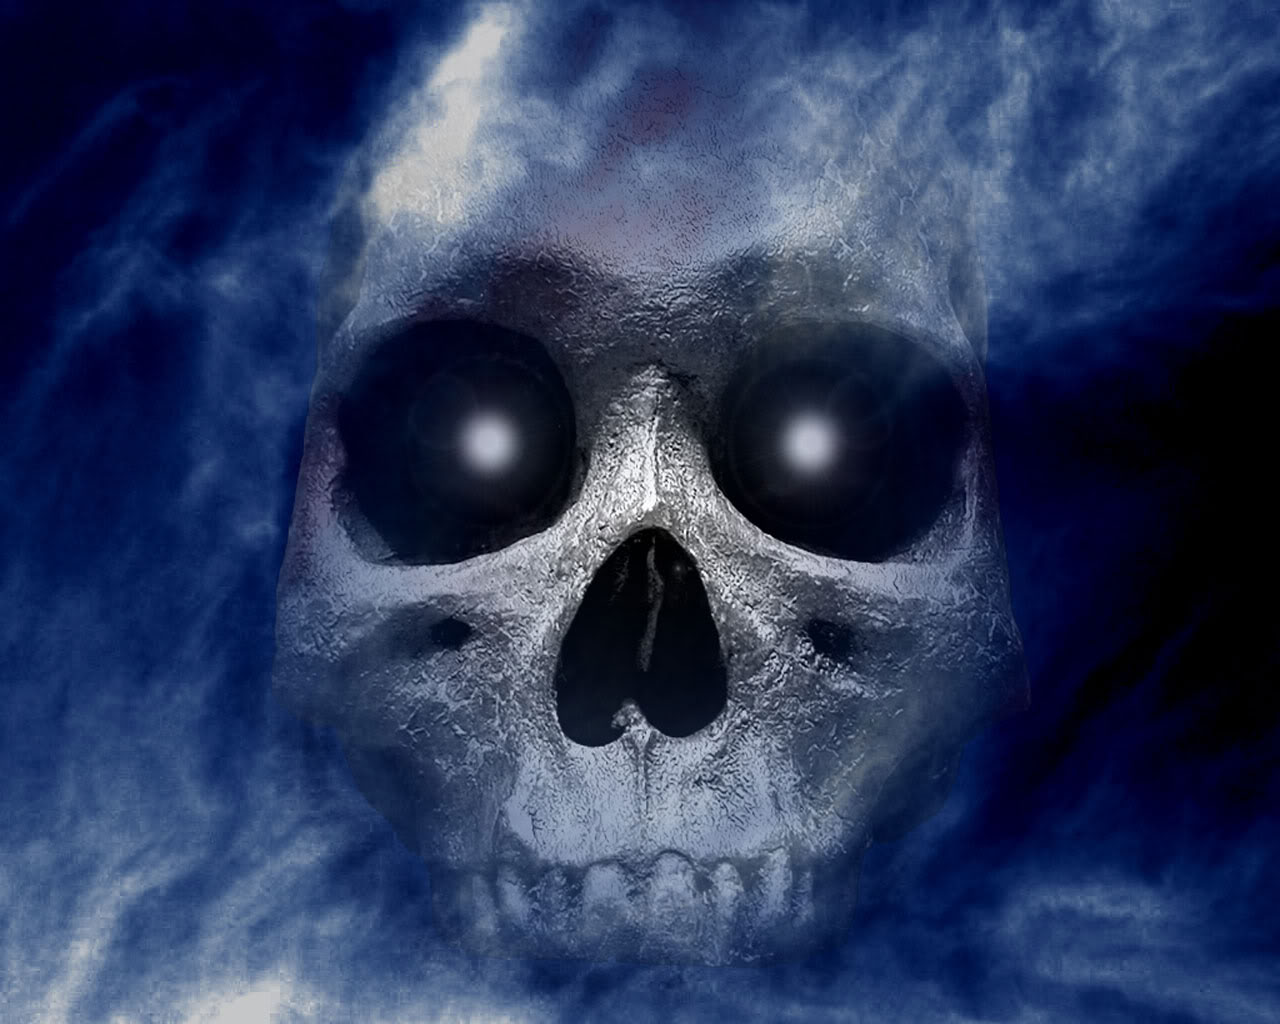 https://blogger.googleusercontent.com/img/b/R29vZ2xl/AVvXsEhQSE6N7yg1hgdxMVgbvrDbcf5pAXGZjRzNqGMz4BUgPwWoihtbxA5ZYnaC042rpYXh41wGqL7D4HsqZNwAmZ0uambASuJJ3YJ7gEvzj_omFQ1NFsqSGwYHTnVCWn-JJEIuUxykwFVf6odA/s1600/halloween-skull-wallpaper.jpg